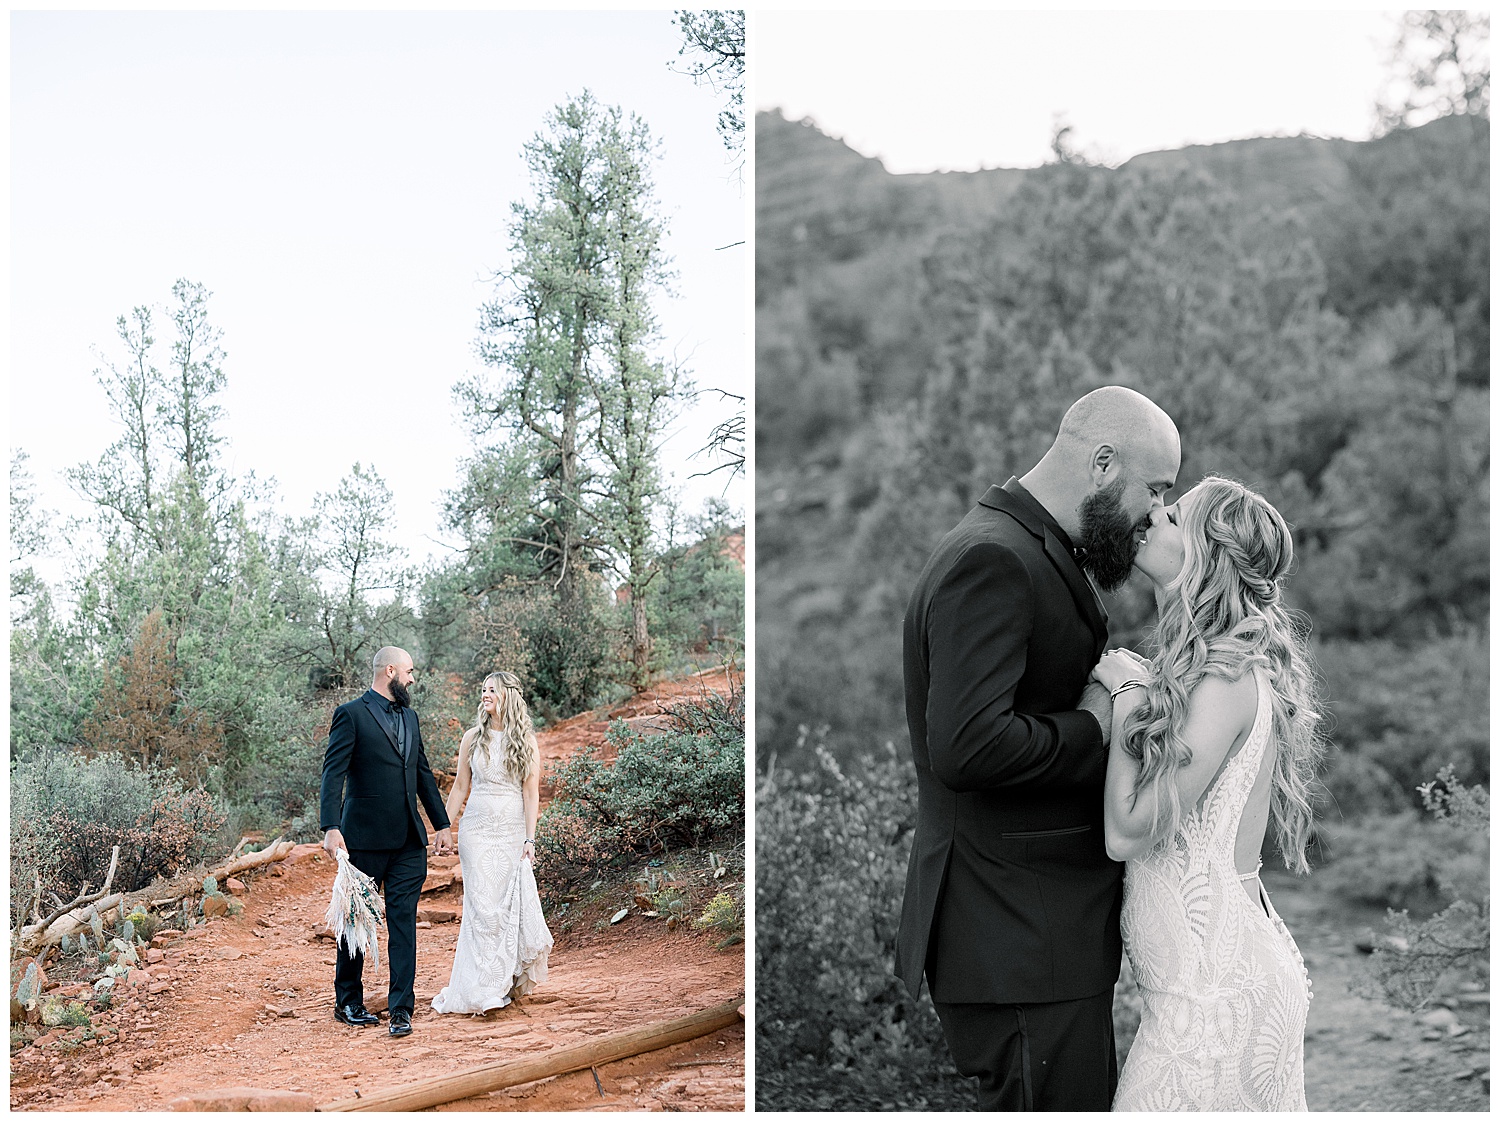 Sedona Arizona, Elopement in the Fall, Fall wedding